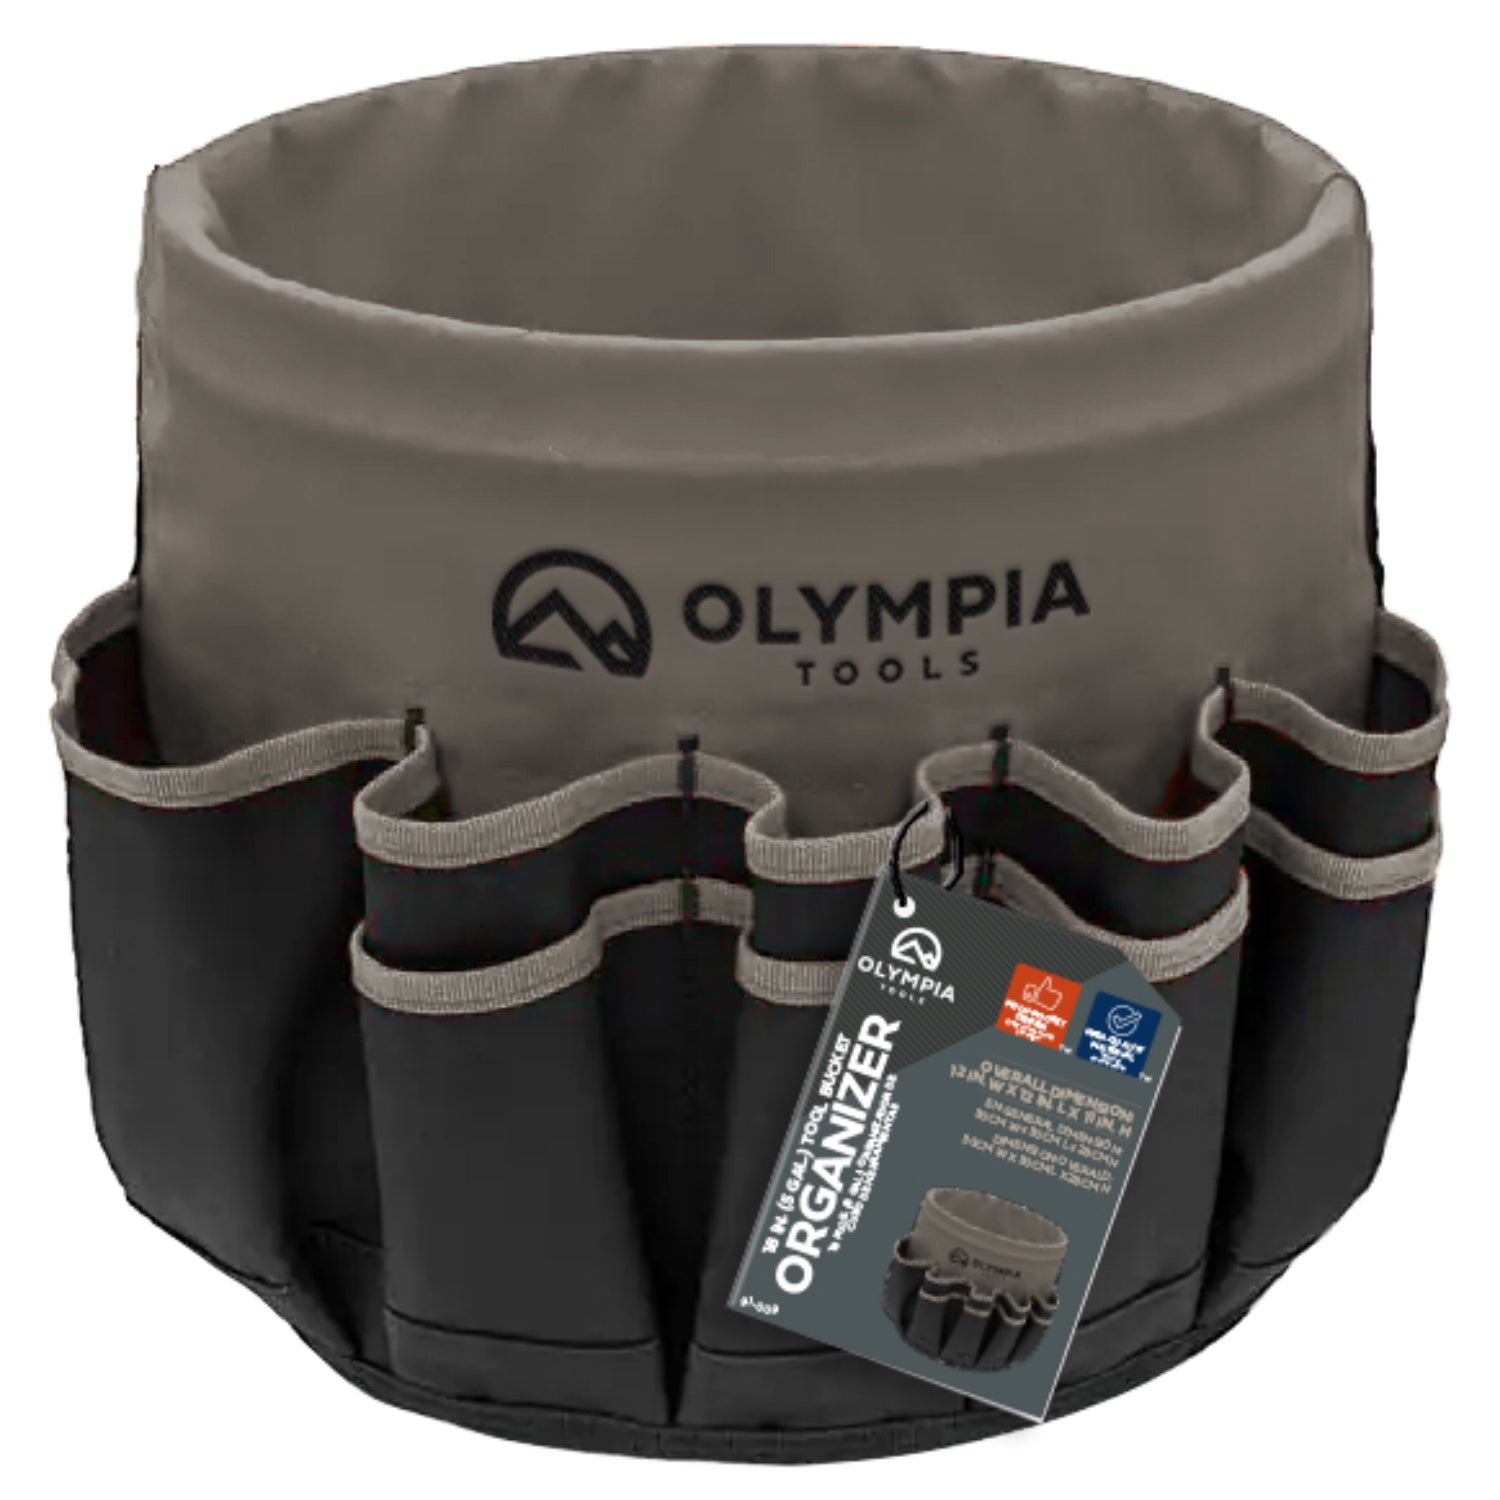 Olympia Tools 4 Drawer Hardware Organizer, 90-800 